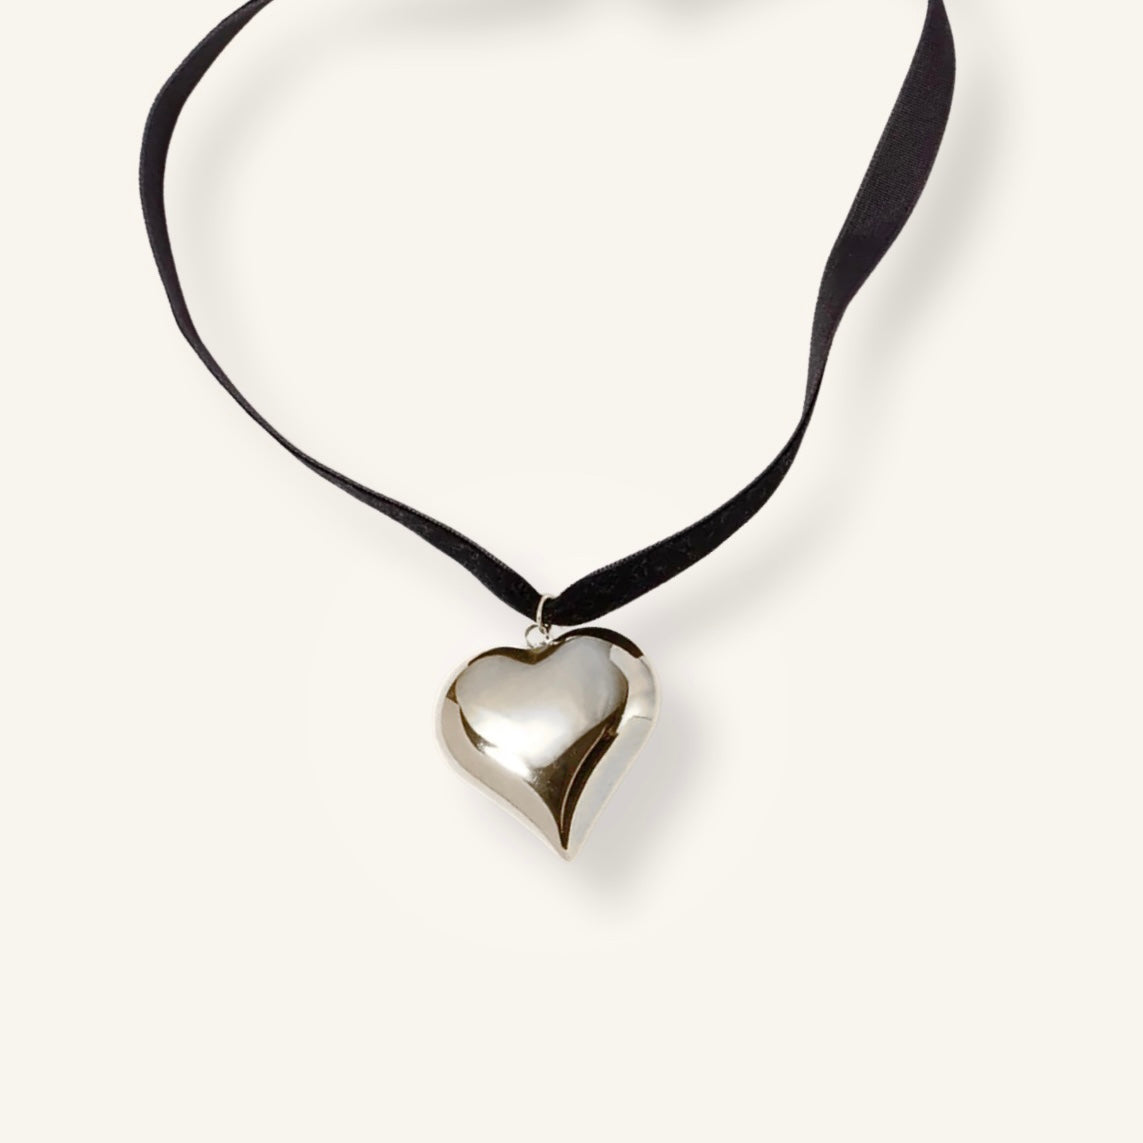 Ninoska silver necklace